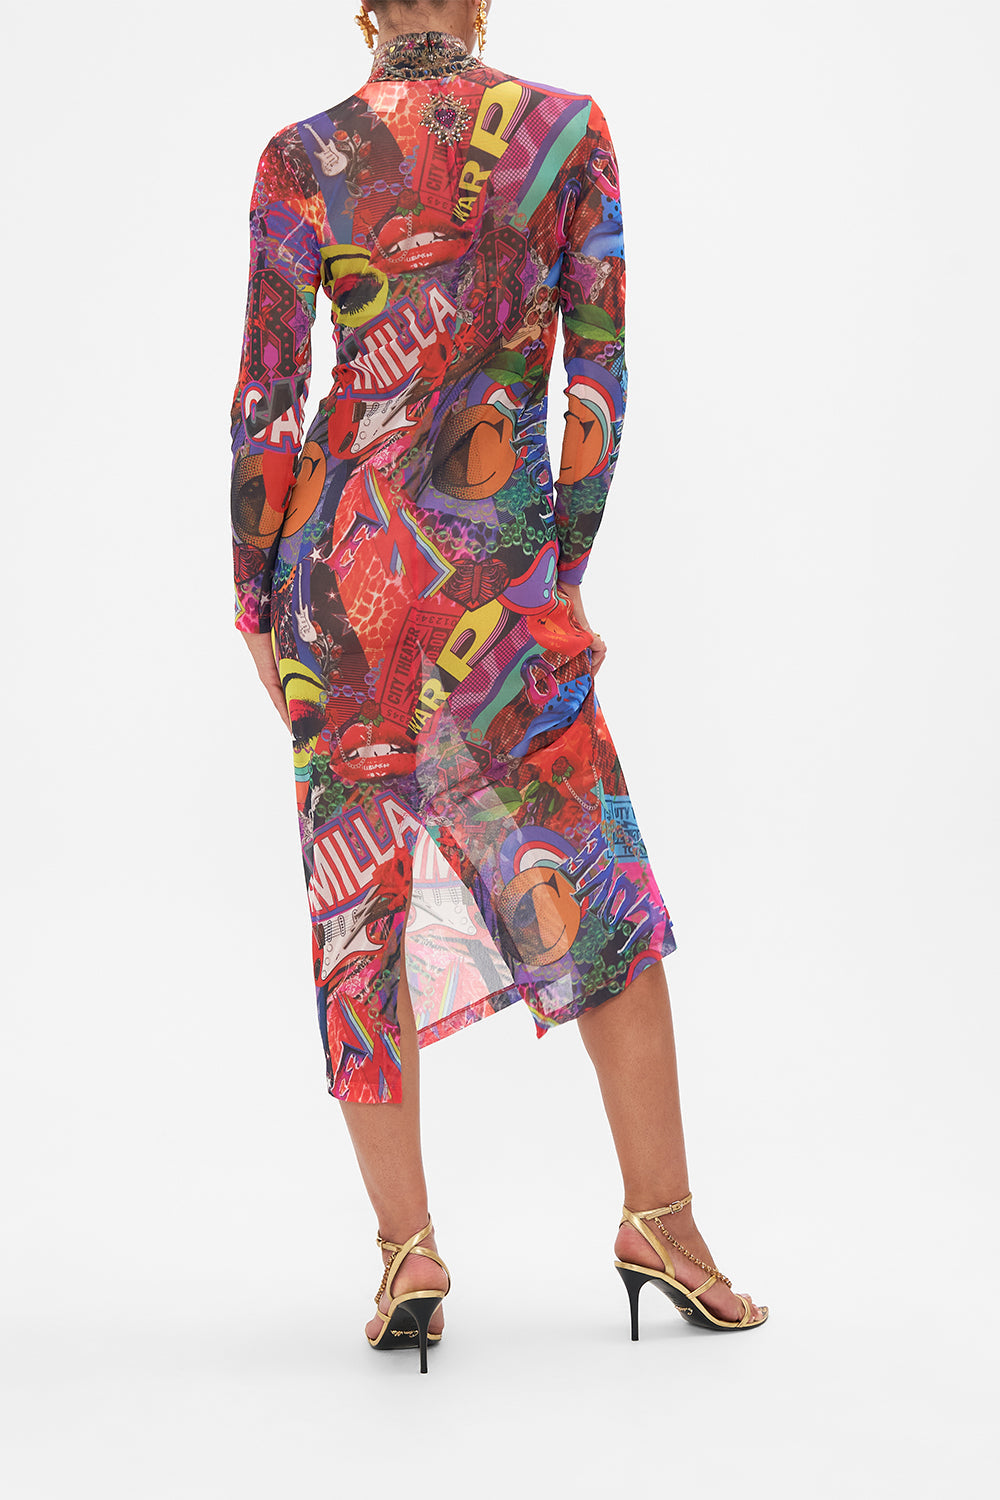 Back view of model wearing CAMILLA mesh turtleneck dress in multicoloured Radical Rebirth print